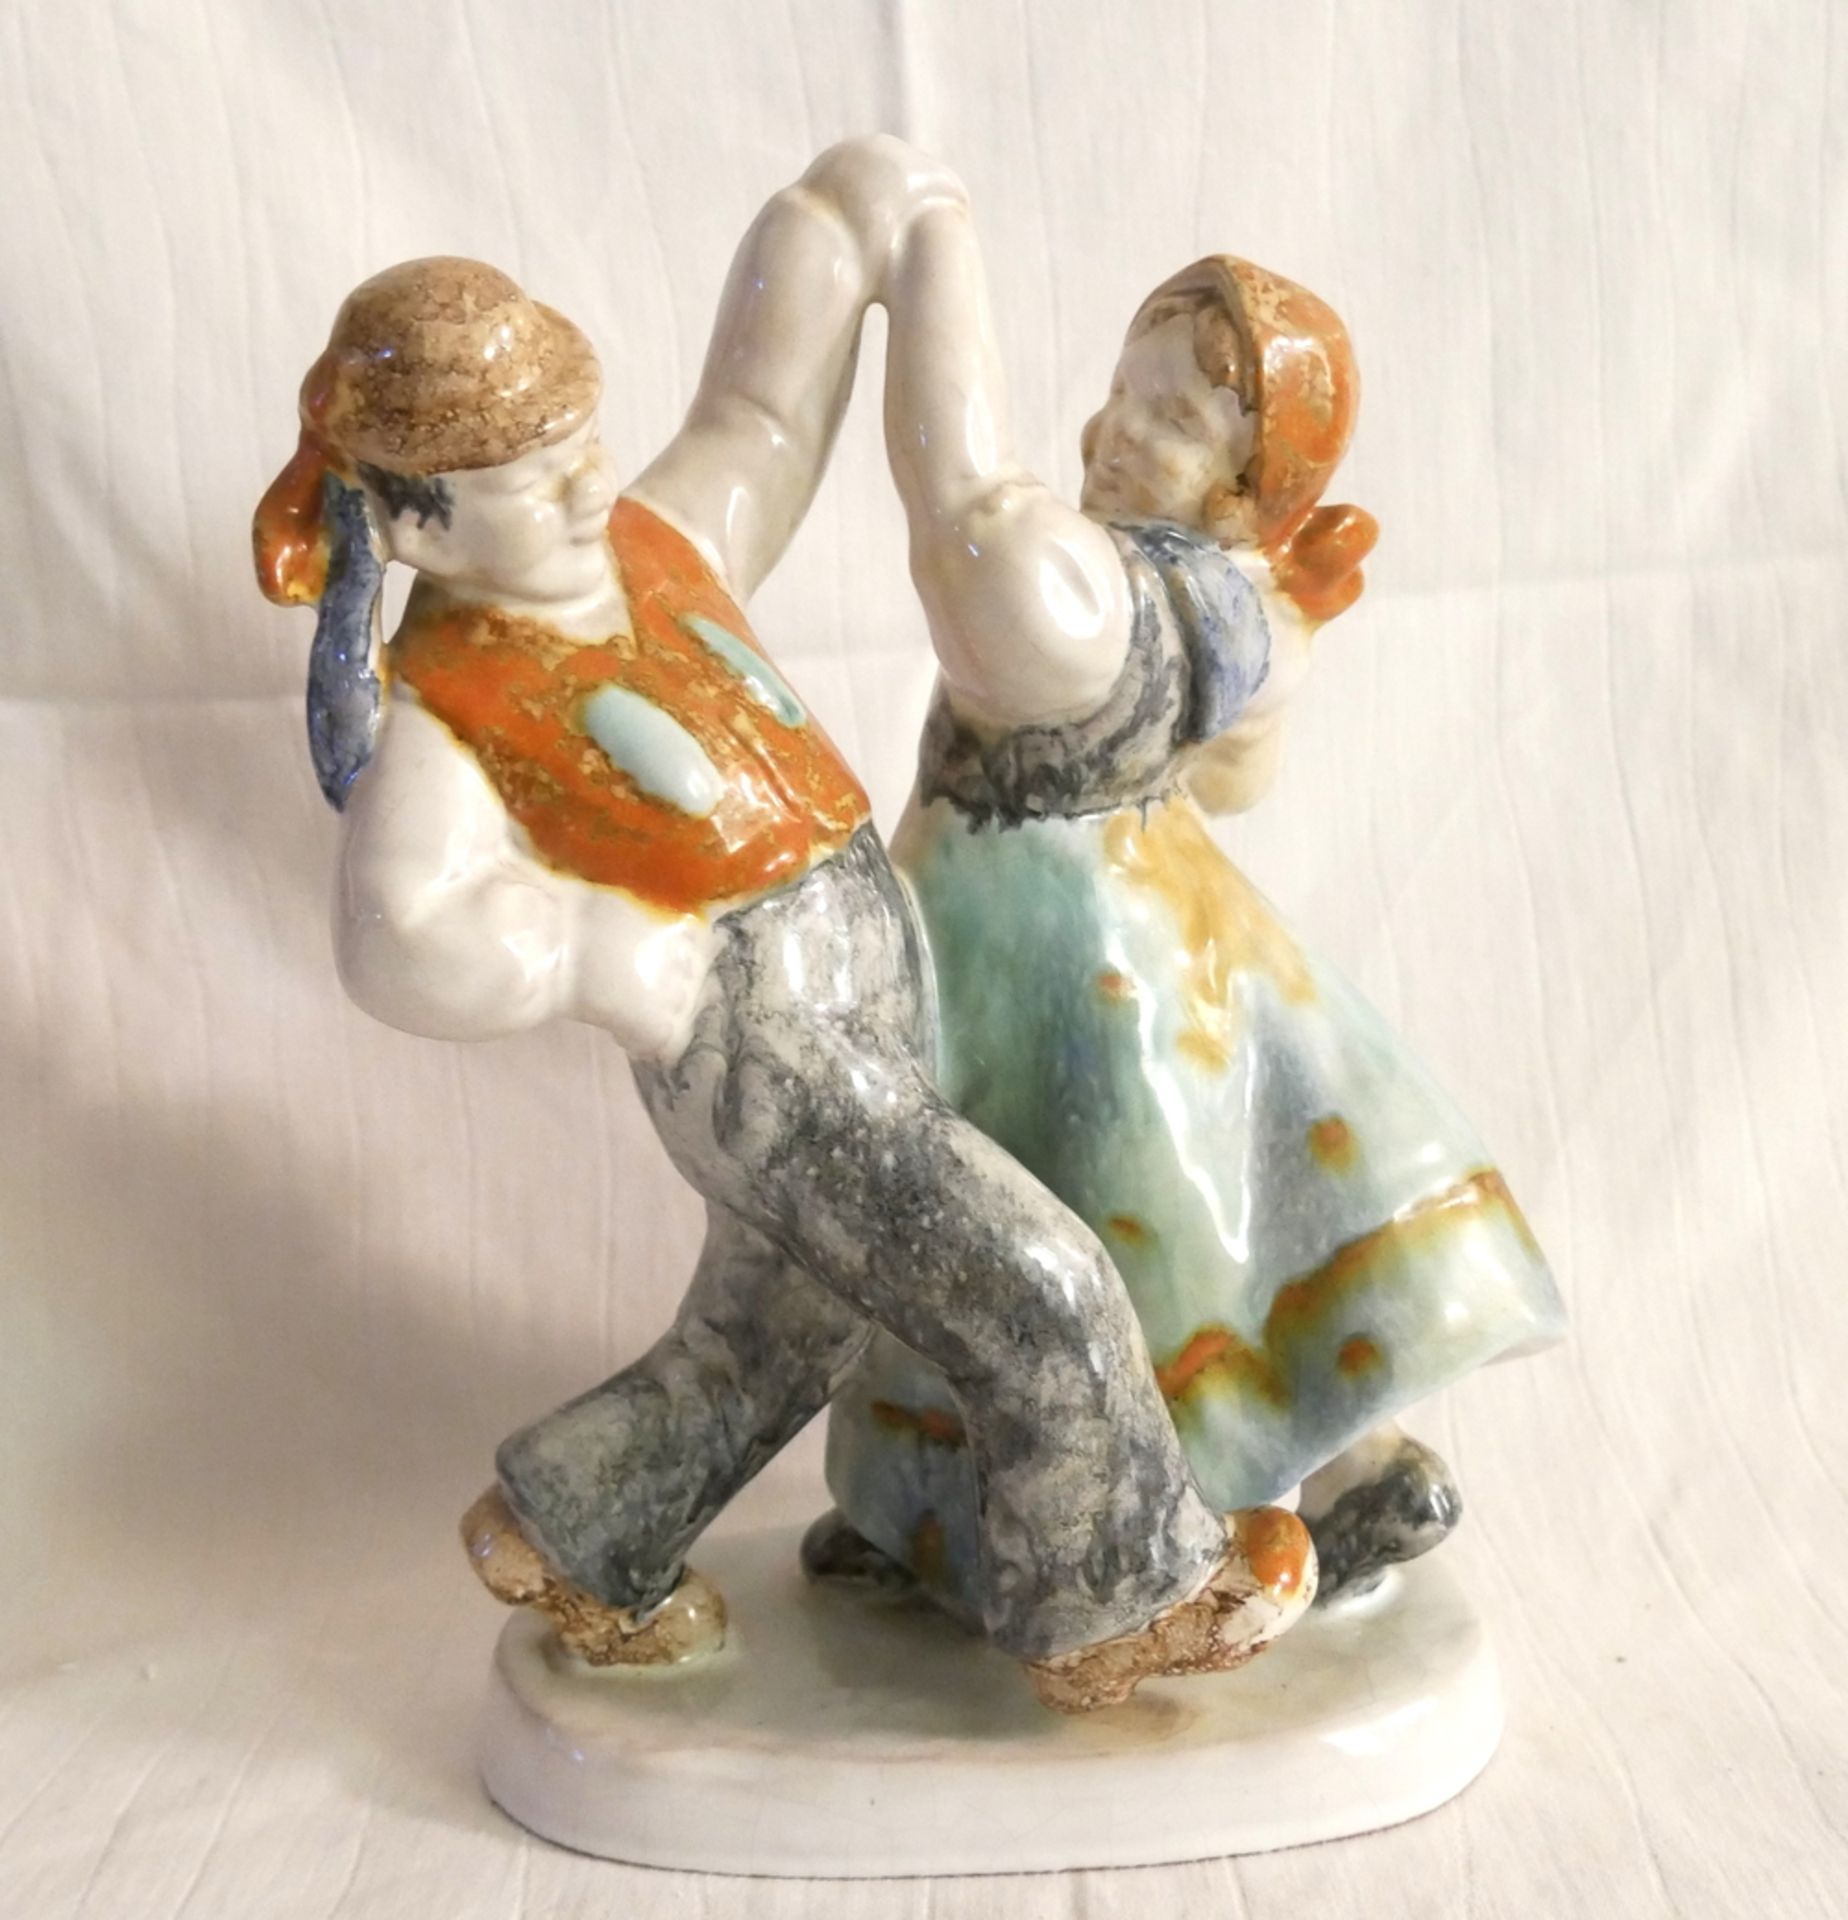 Ausdrucksstarke Majolika Figur "Tanzendes Paar" um 1940. Höhe ca. 23 cm